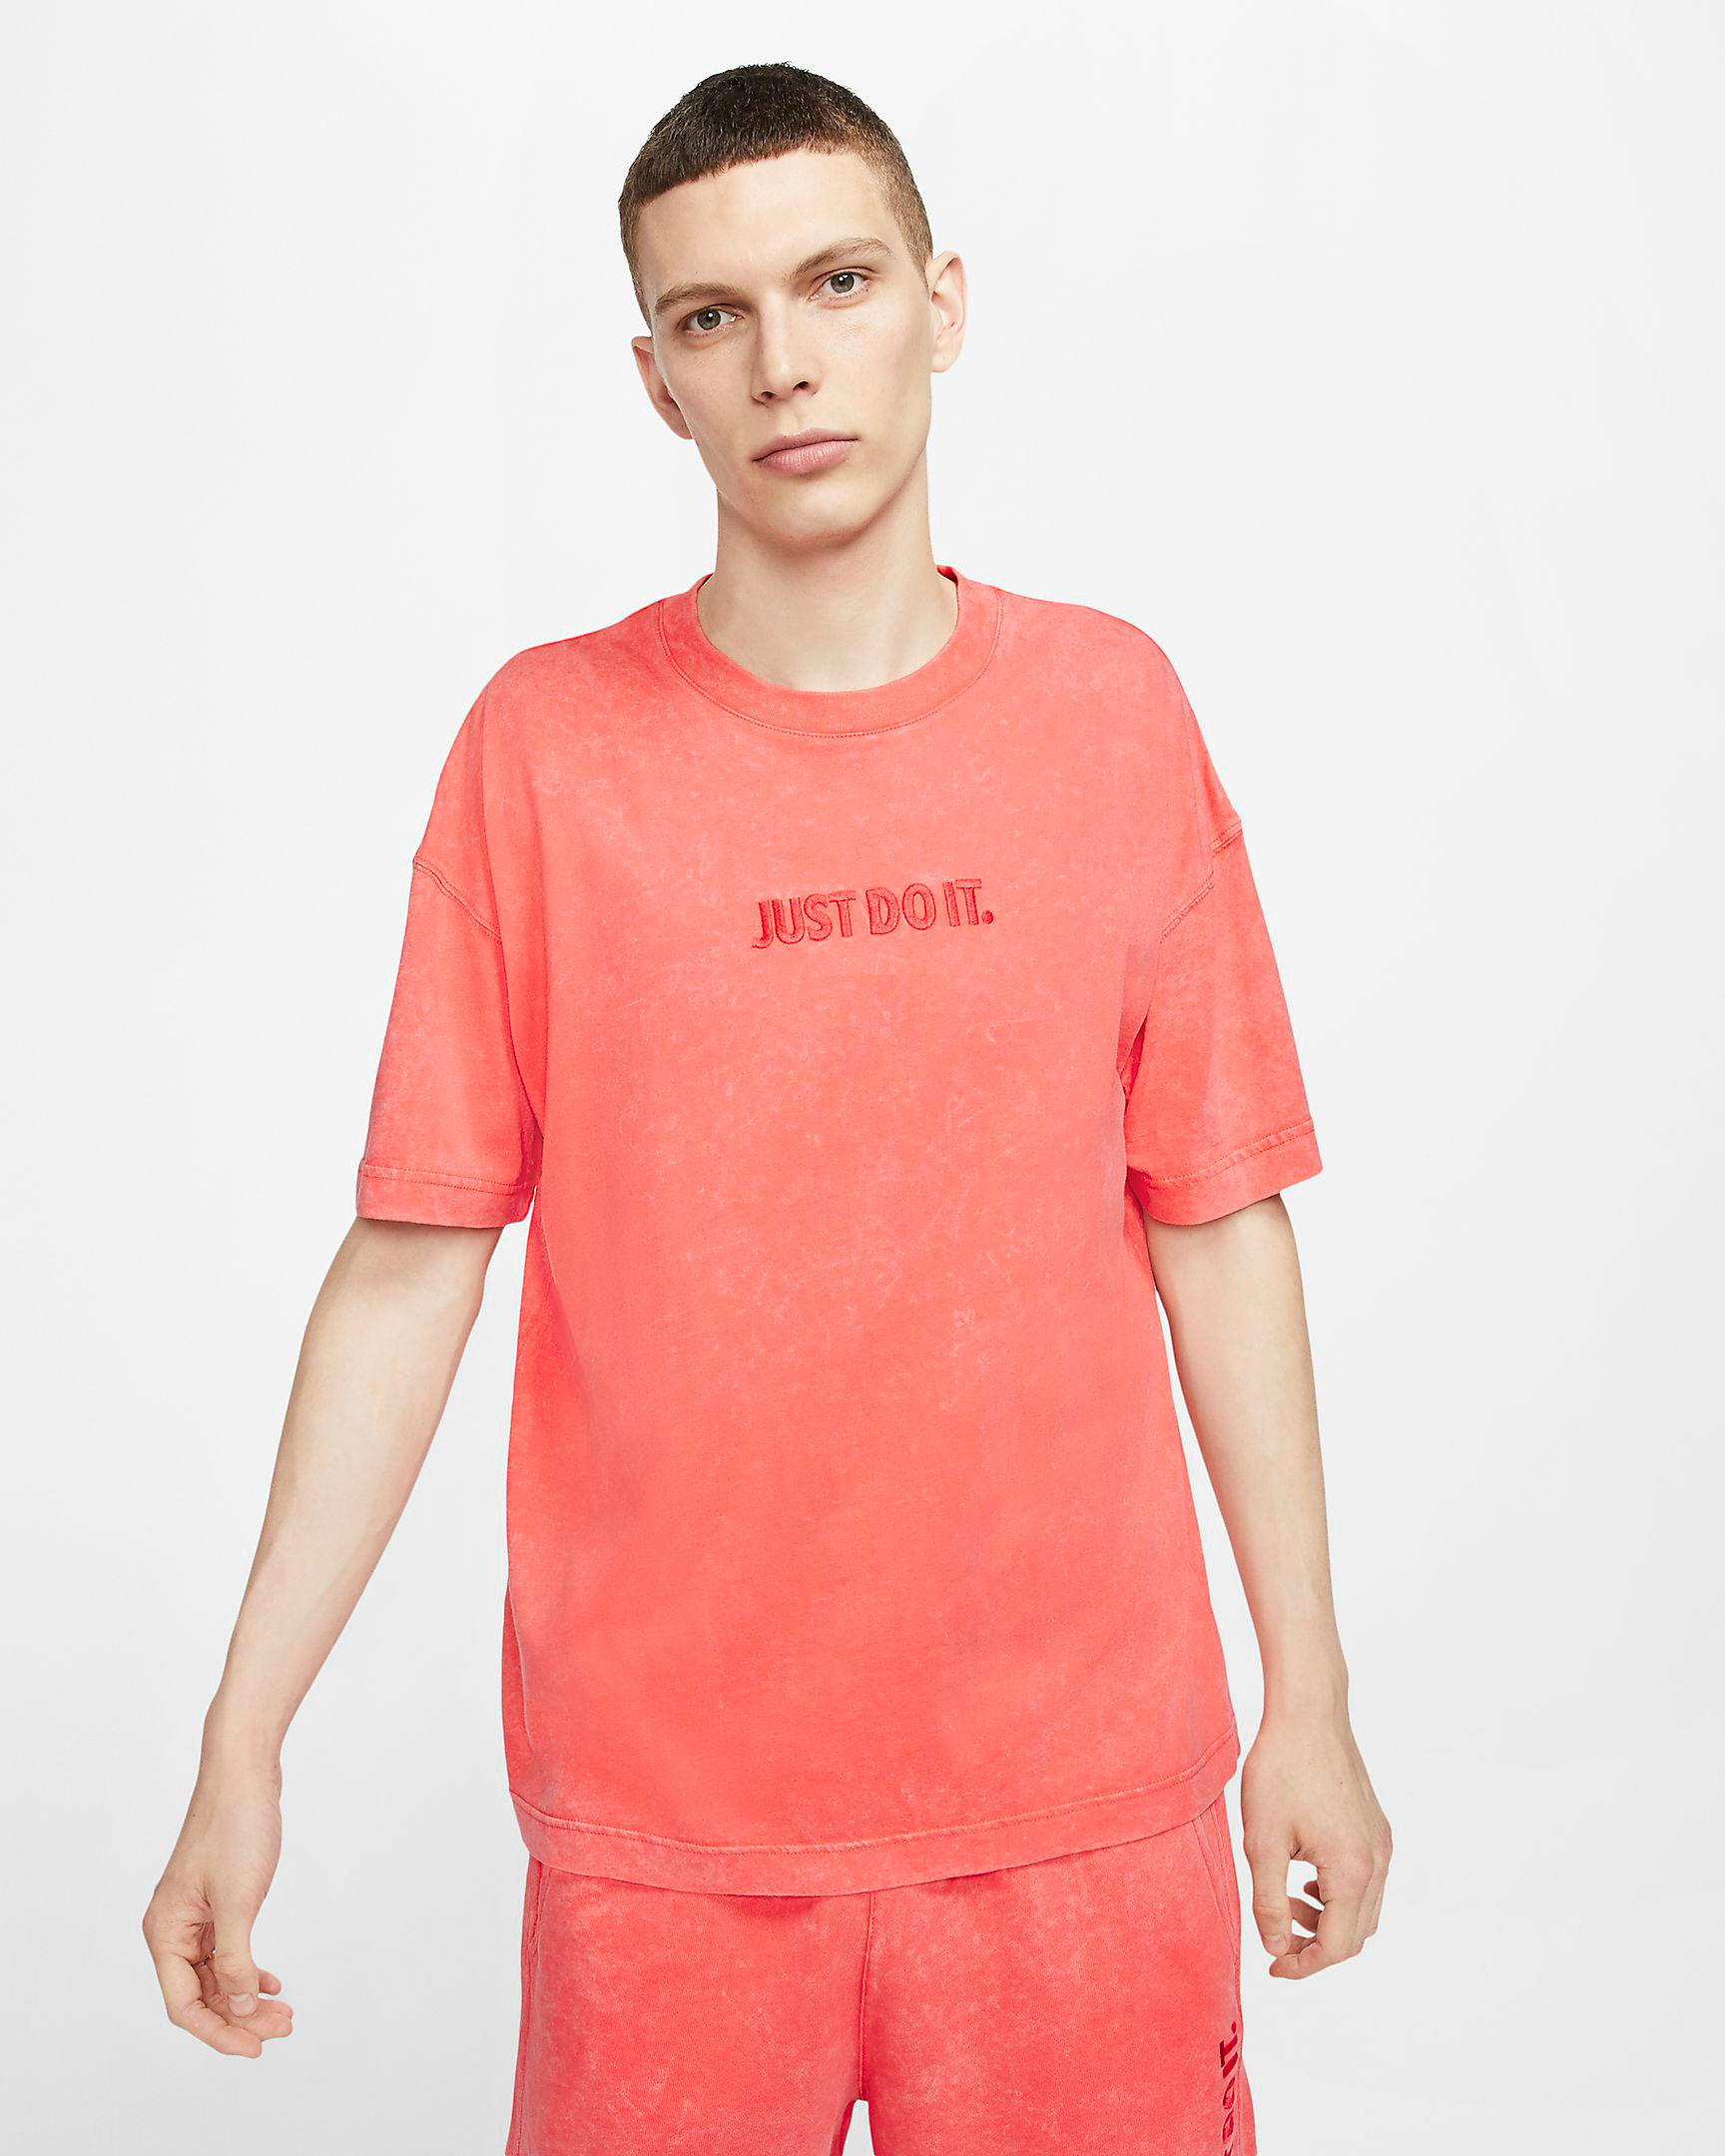 nike-jdi-just-do-it-shirt-infrared-ember